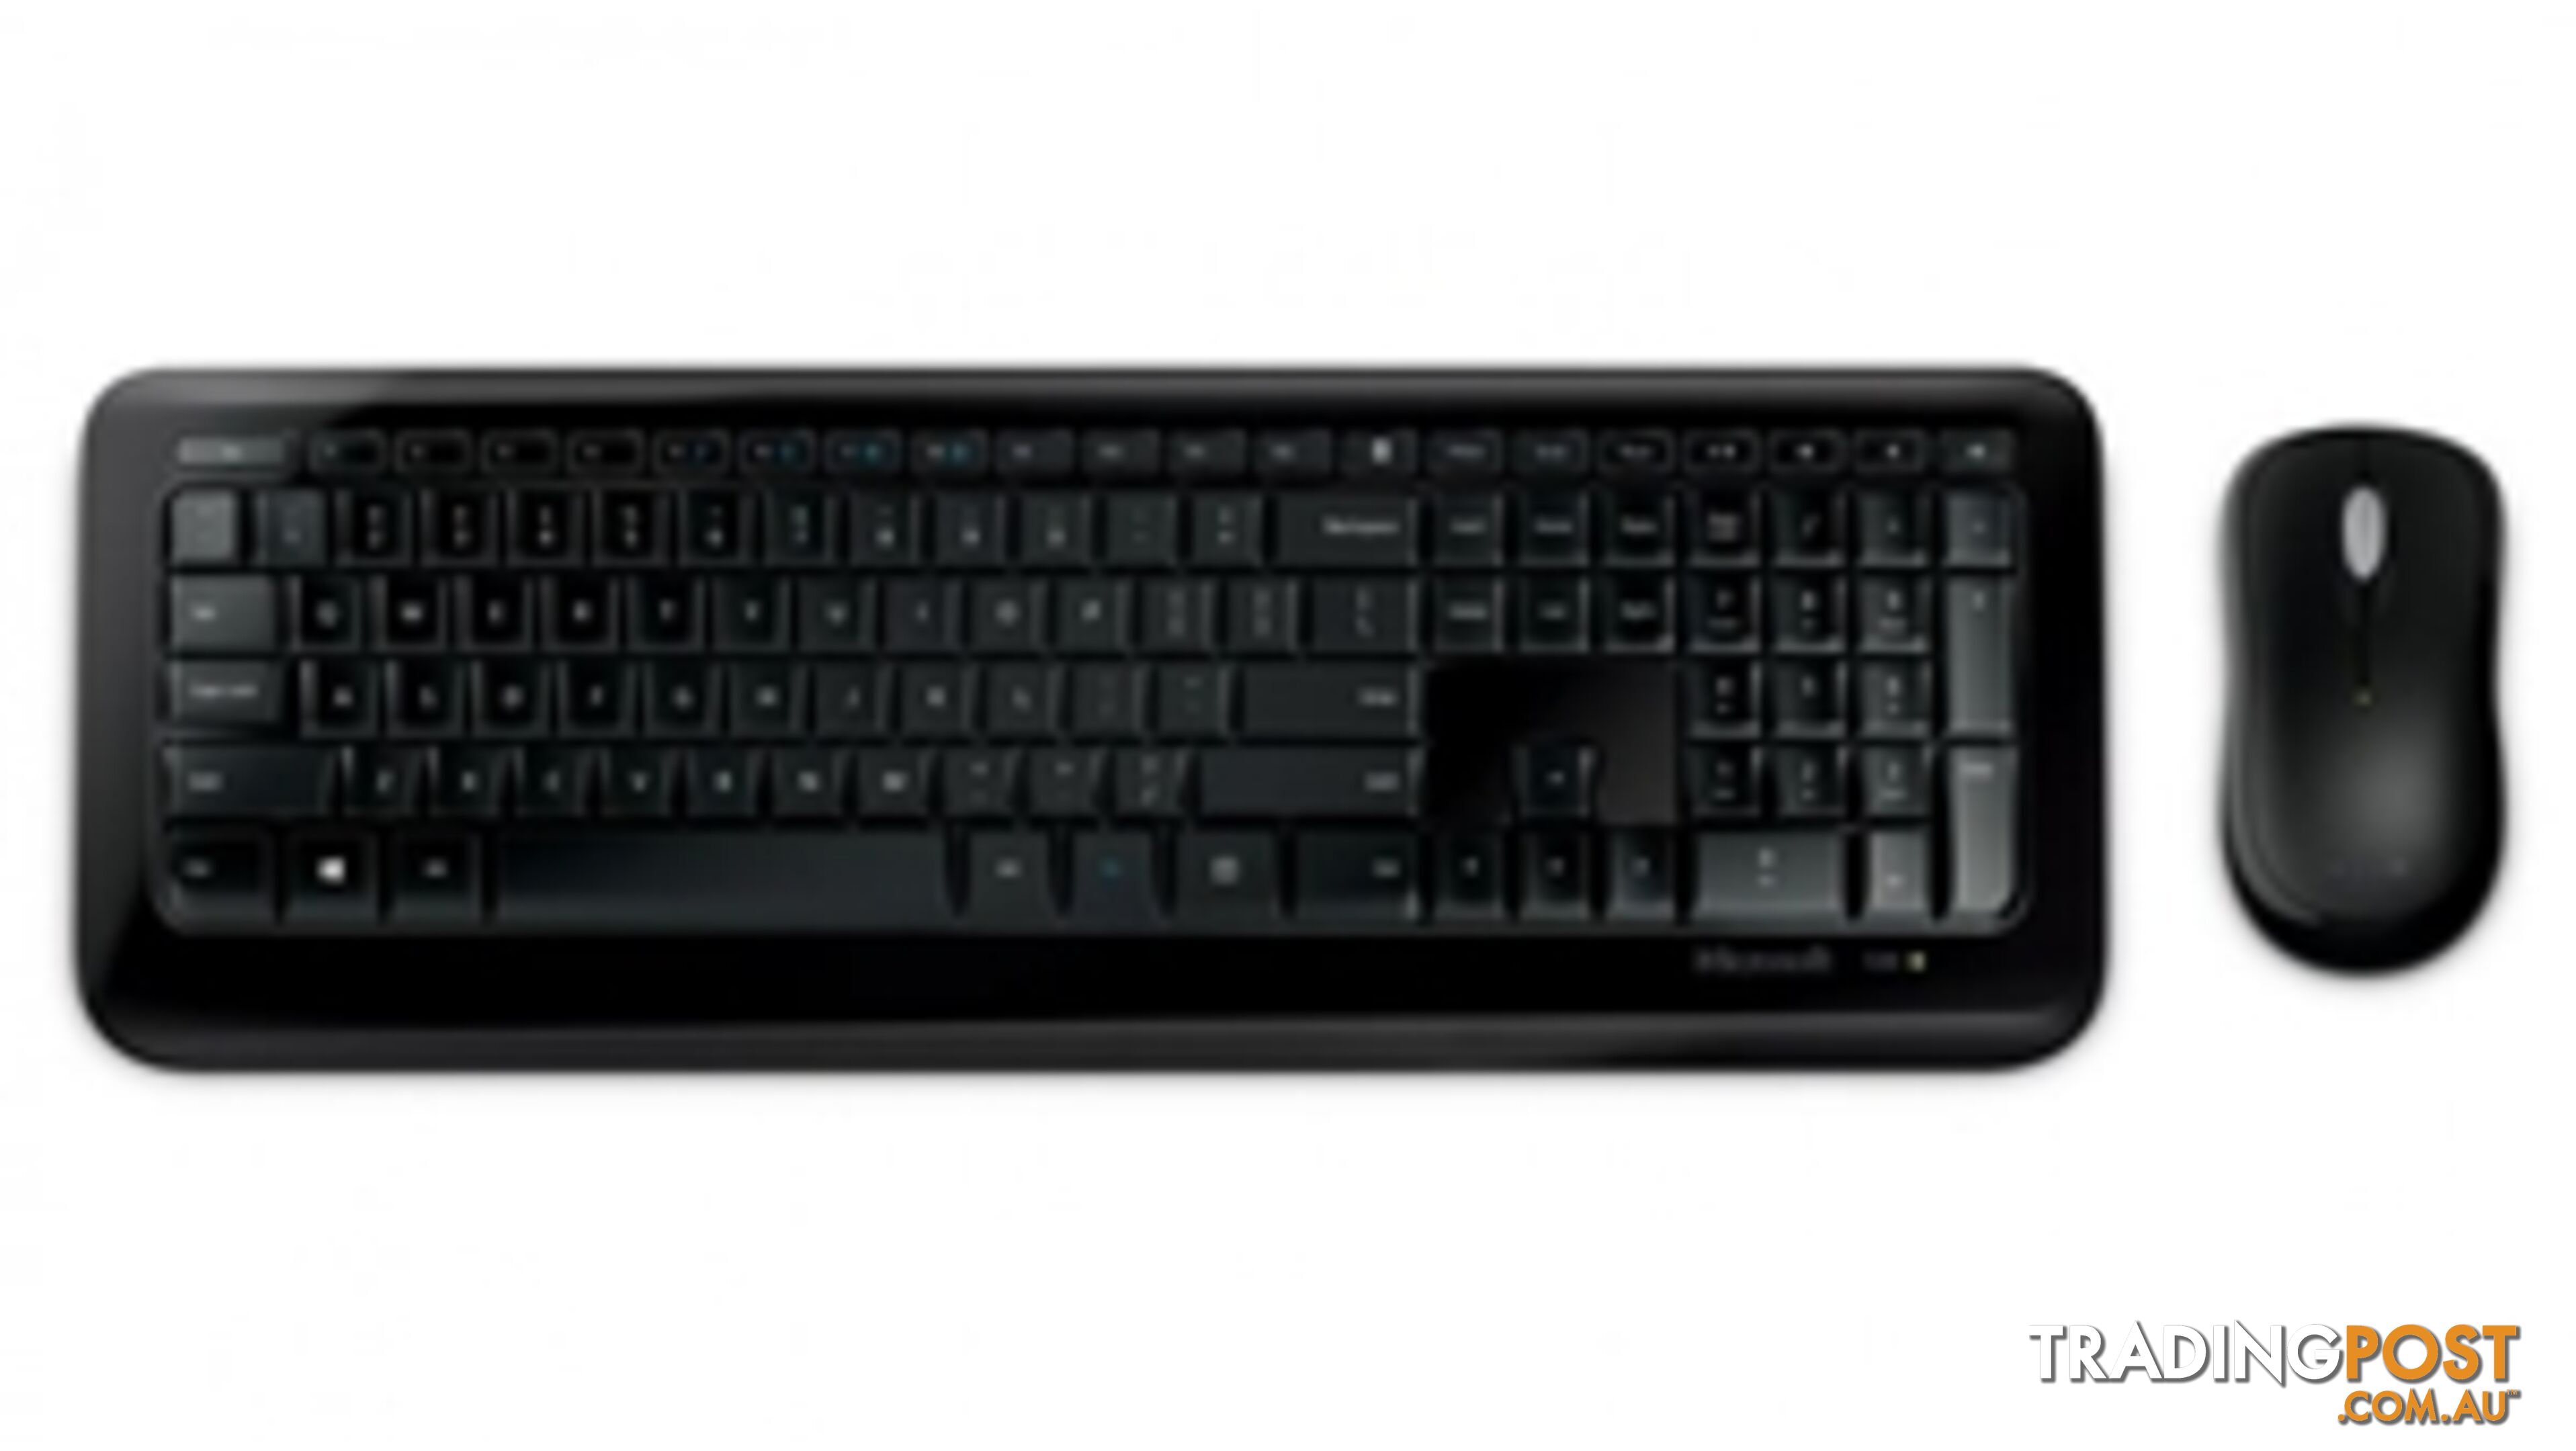 Microsoft Wireless Desktop 850 Keyboard & Mouse Retail Black - KBMS-WLDT850